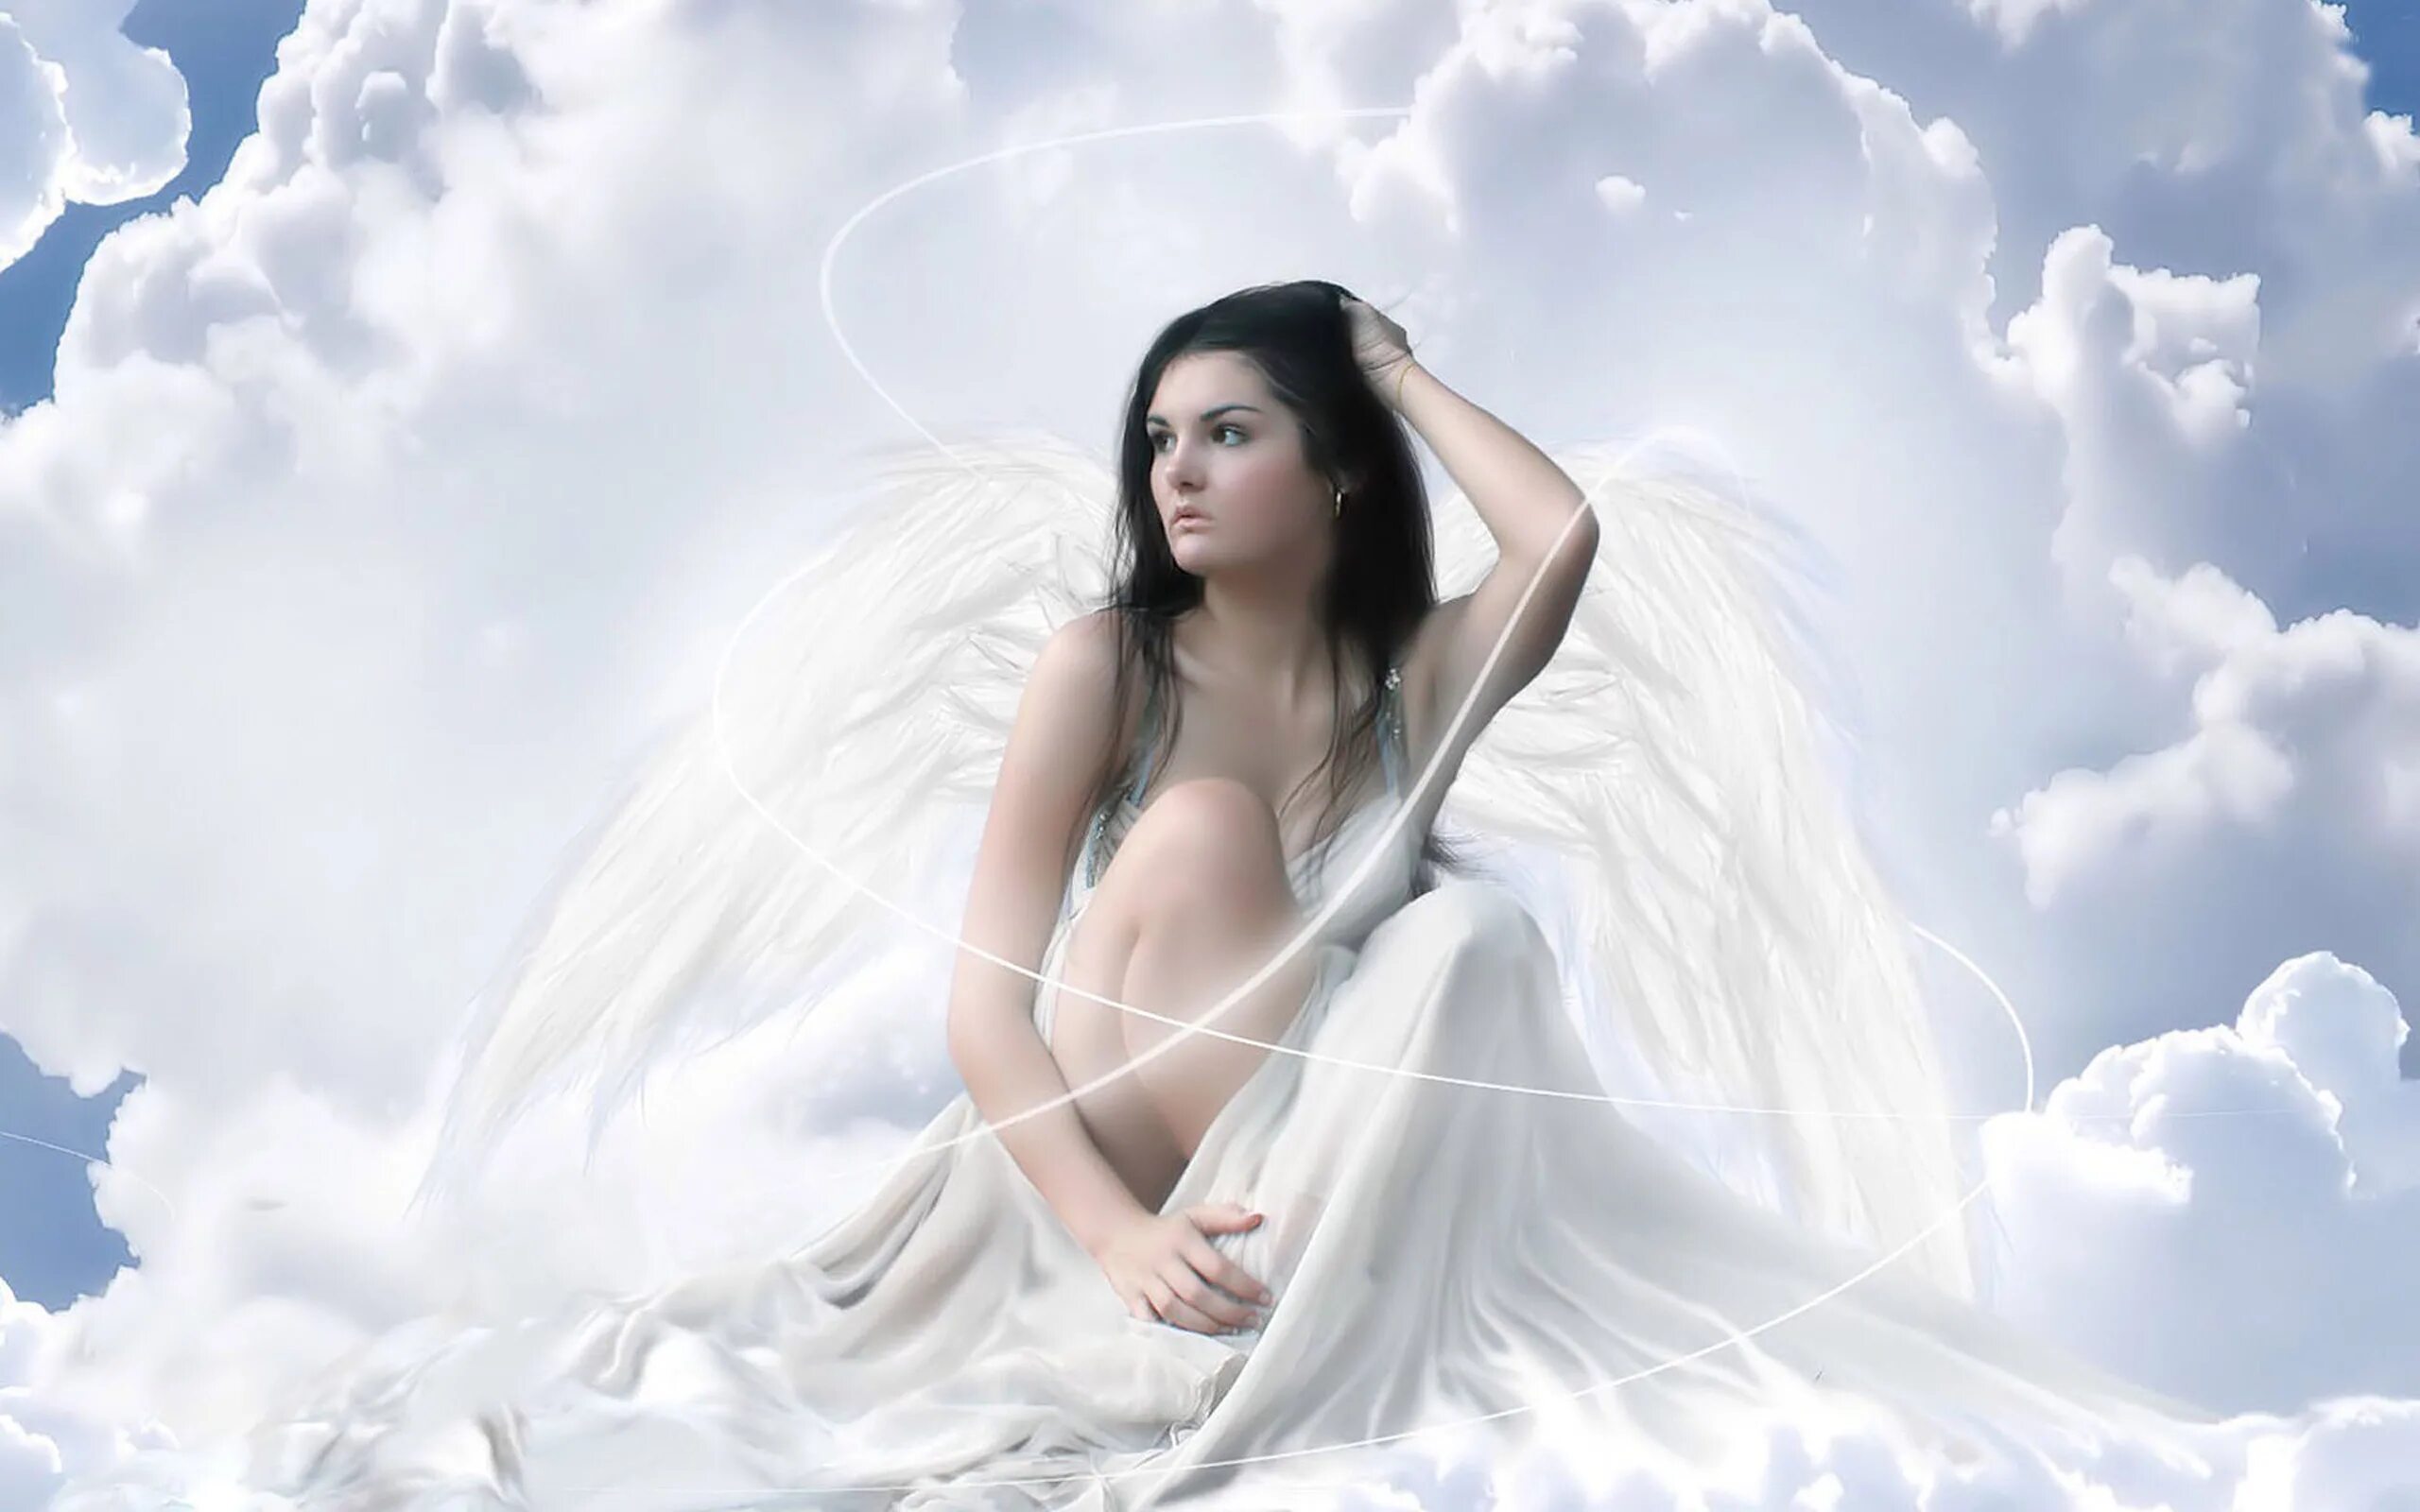 Ангела твоей мечты. Энджел Уайт ангел. Ангел богиня. Нефела богиня. Девушка - ангел.